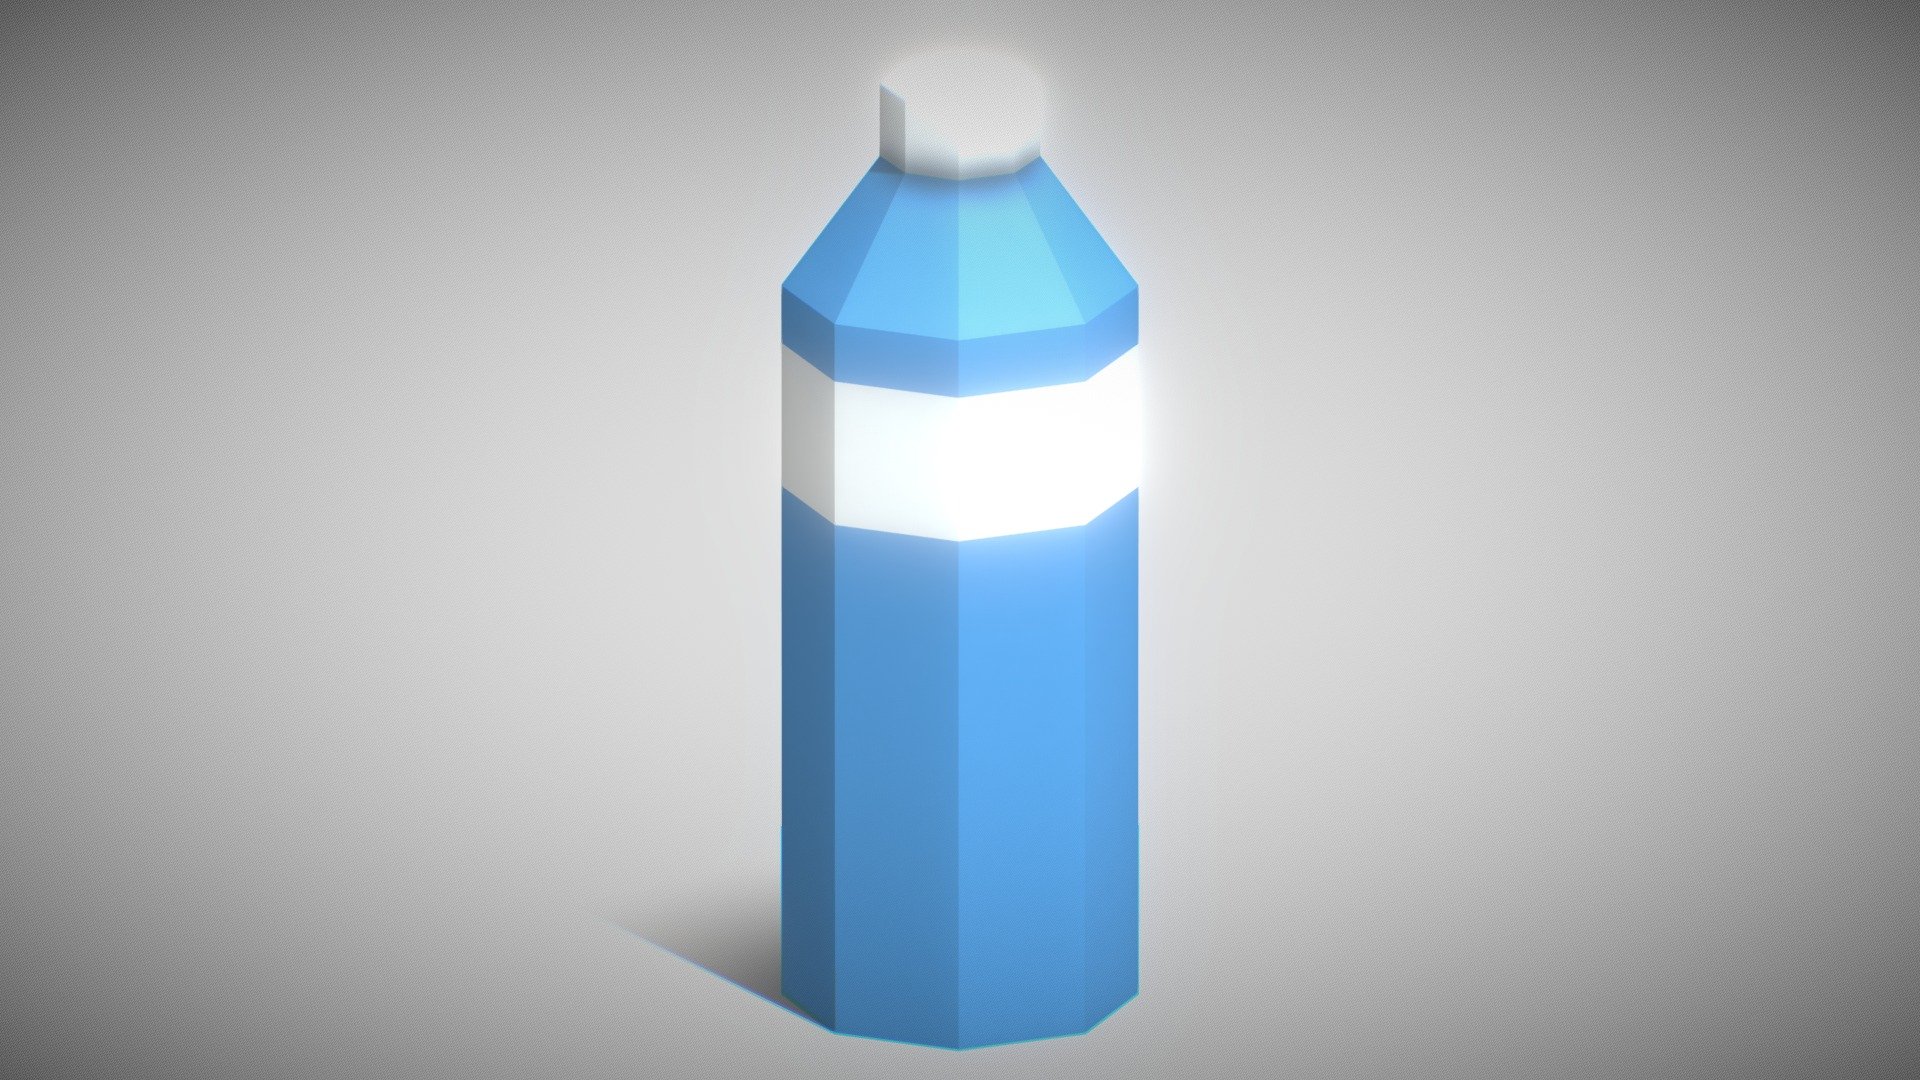 3D model Glue Bottle VR / AR / low-poly